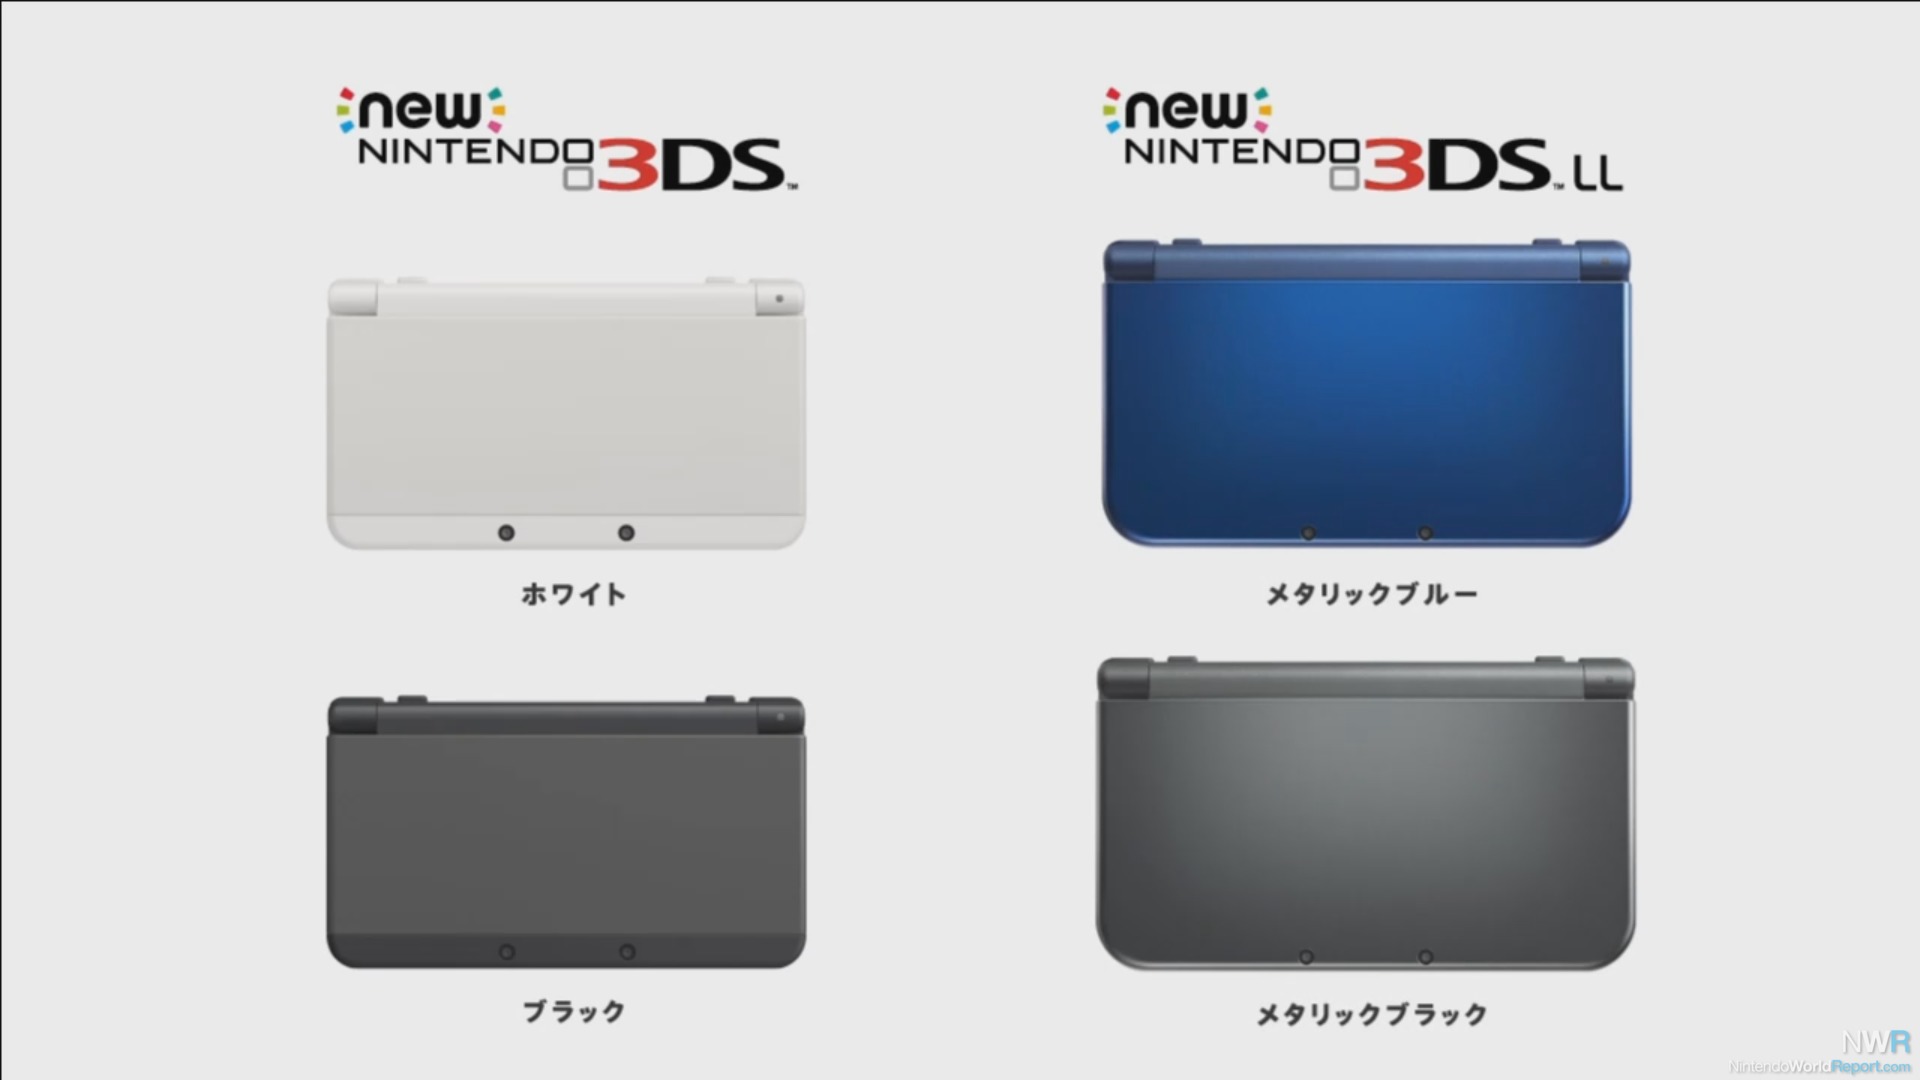 Nintendo Newsletter: Last Shot At Majora's Mask New 3DS XL In North America  Tomorrow - News - Nintendo World Report